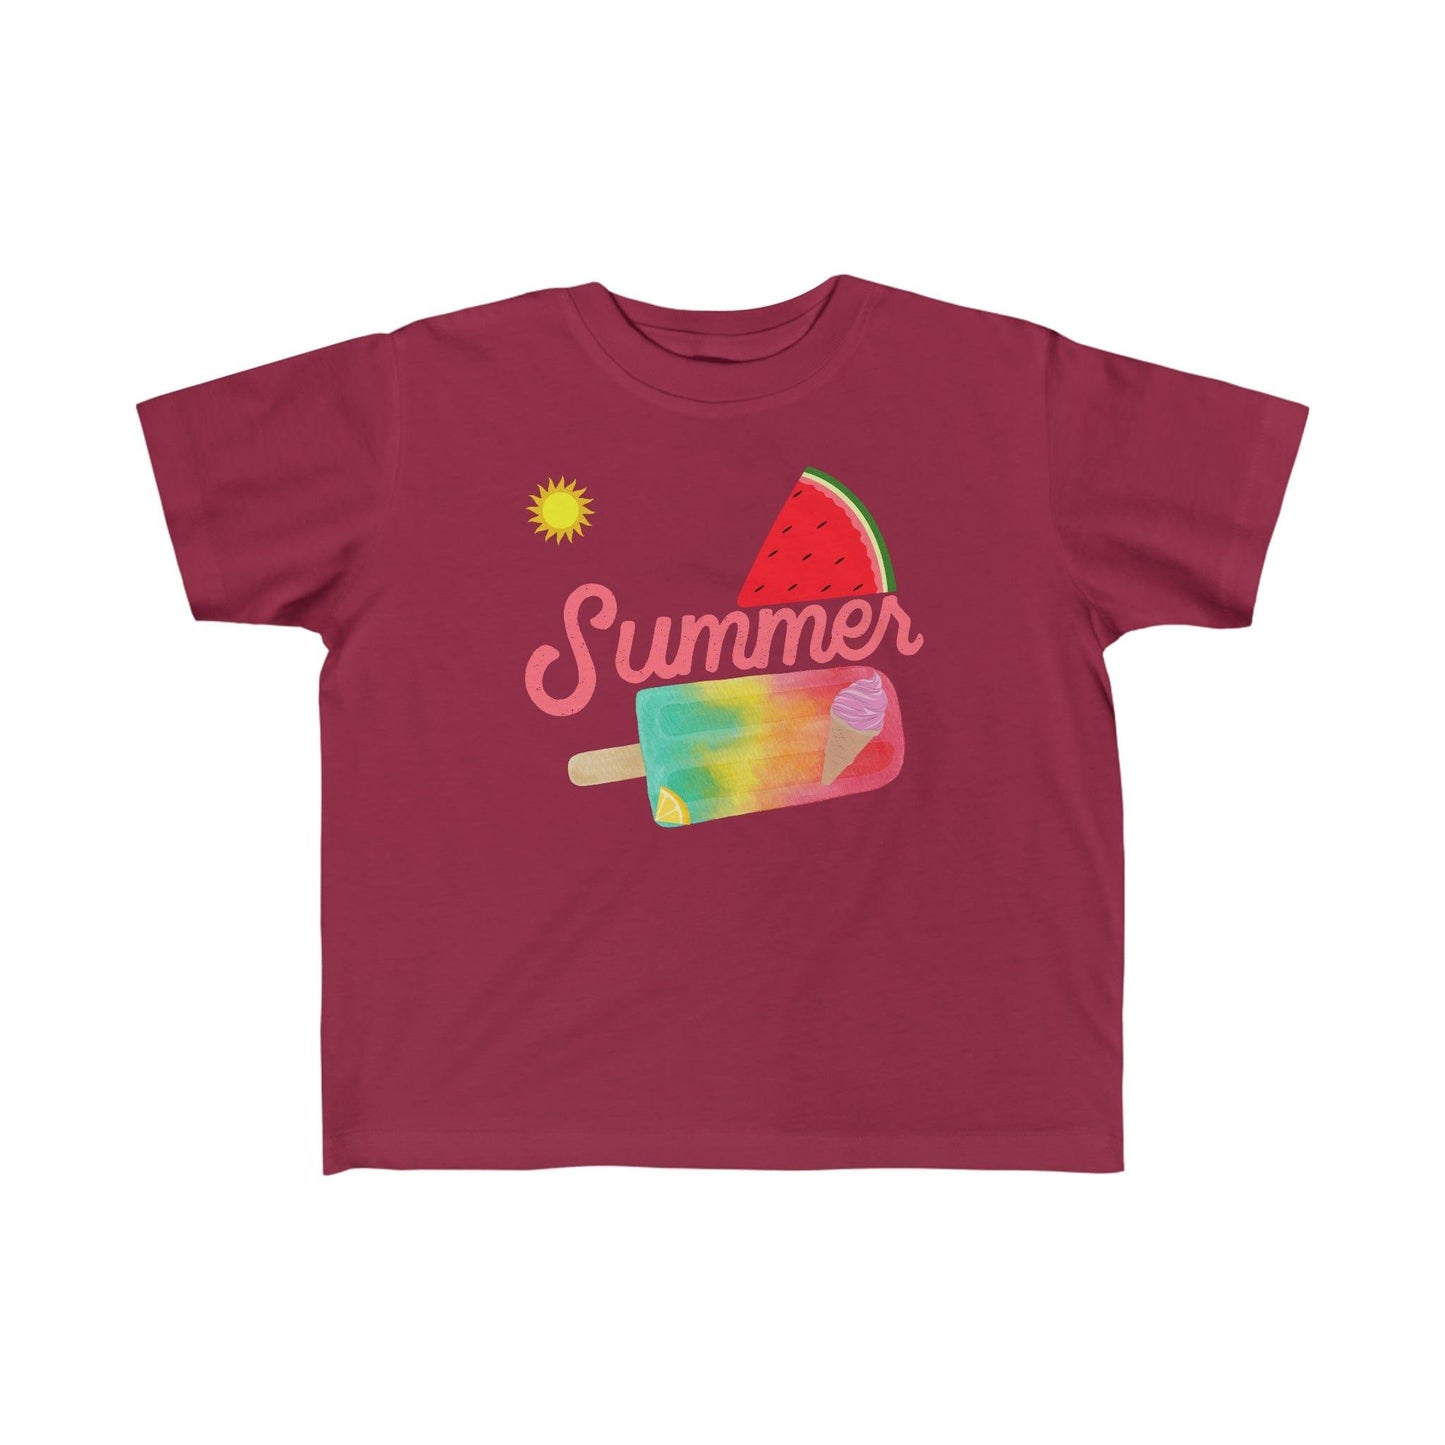 Toddler's Summer Tee, Summer Shirt for Toddlers Birthday gift Kids Tshirt - Giftsmojo